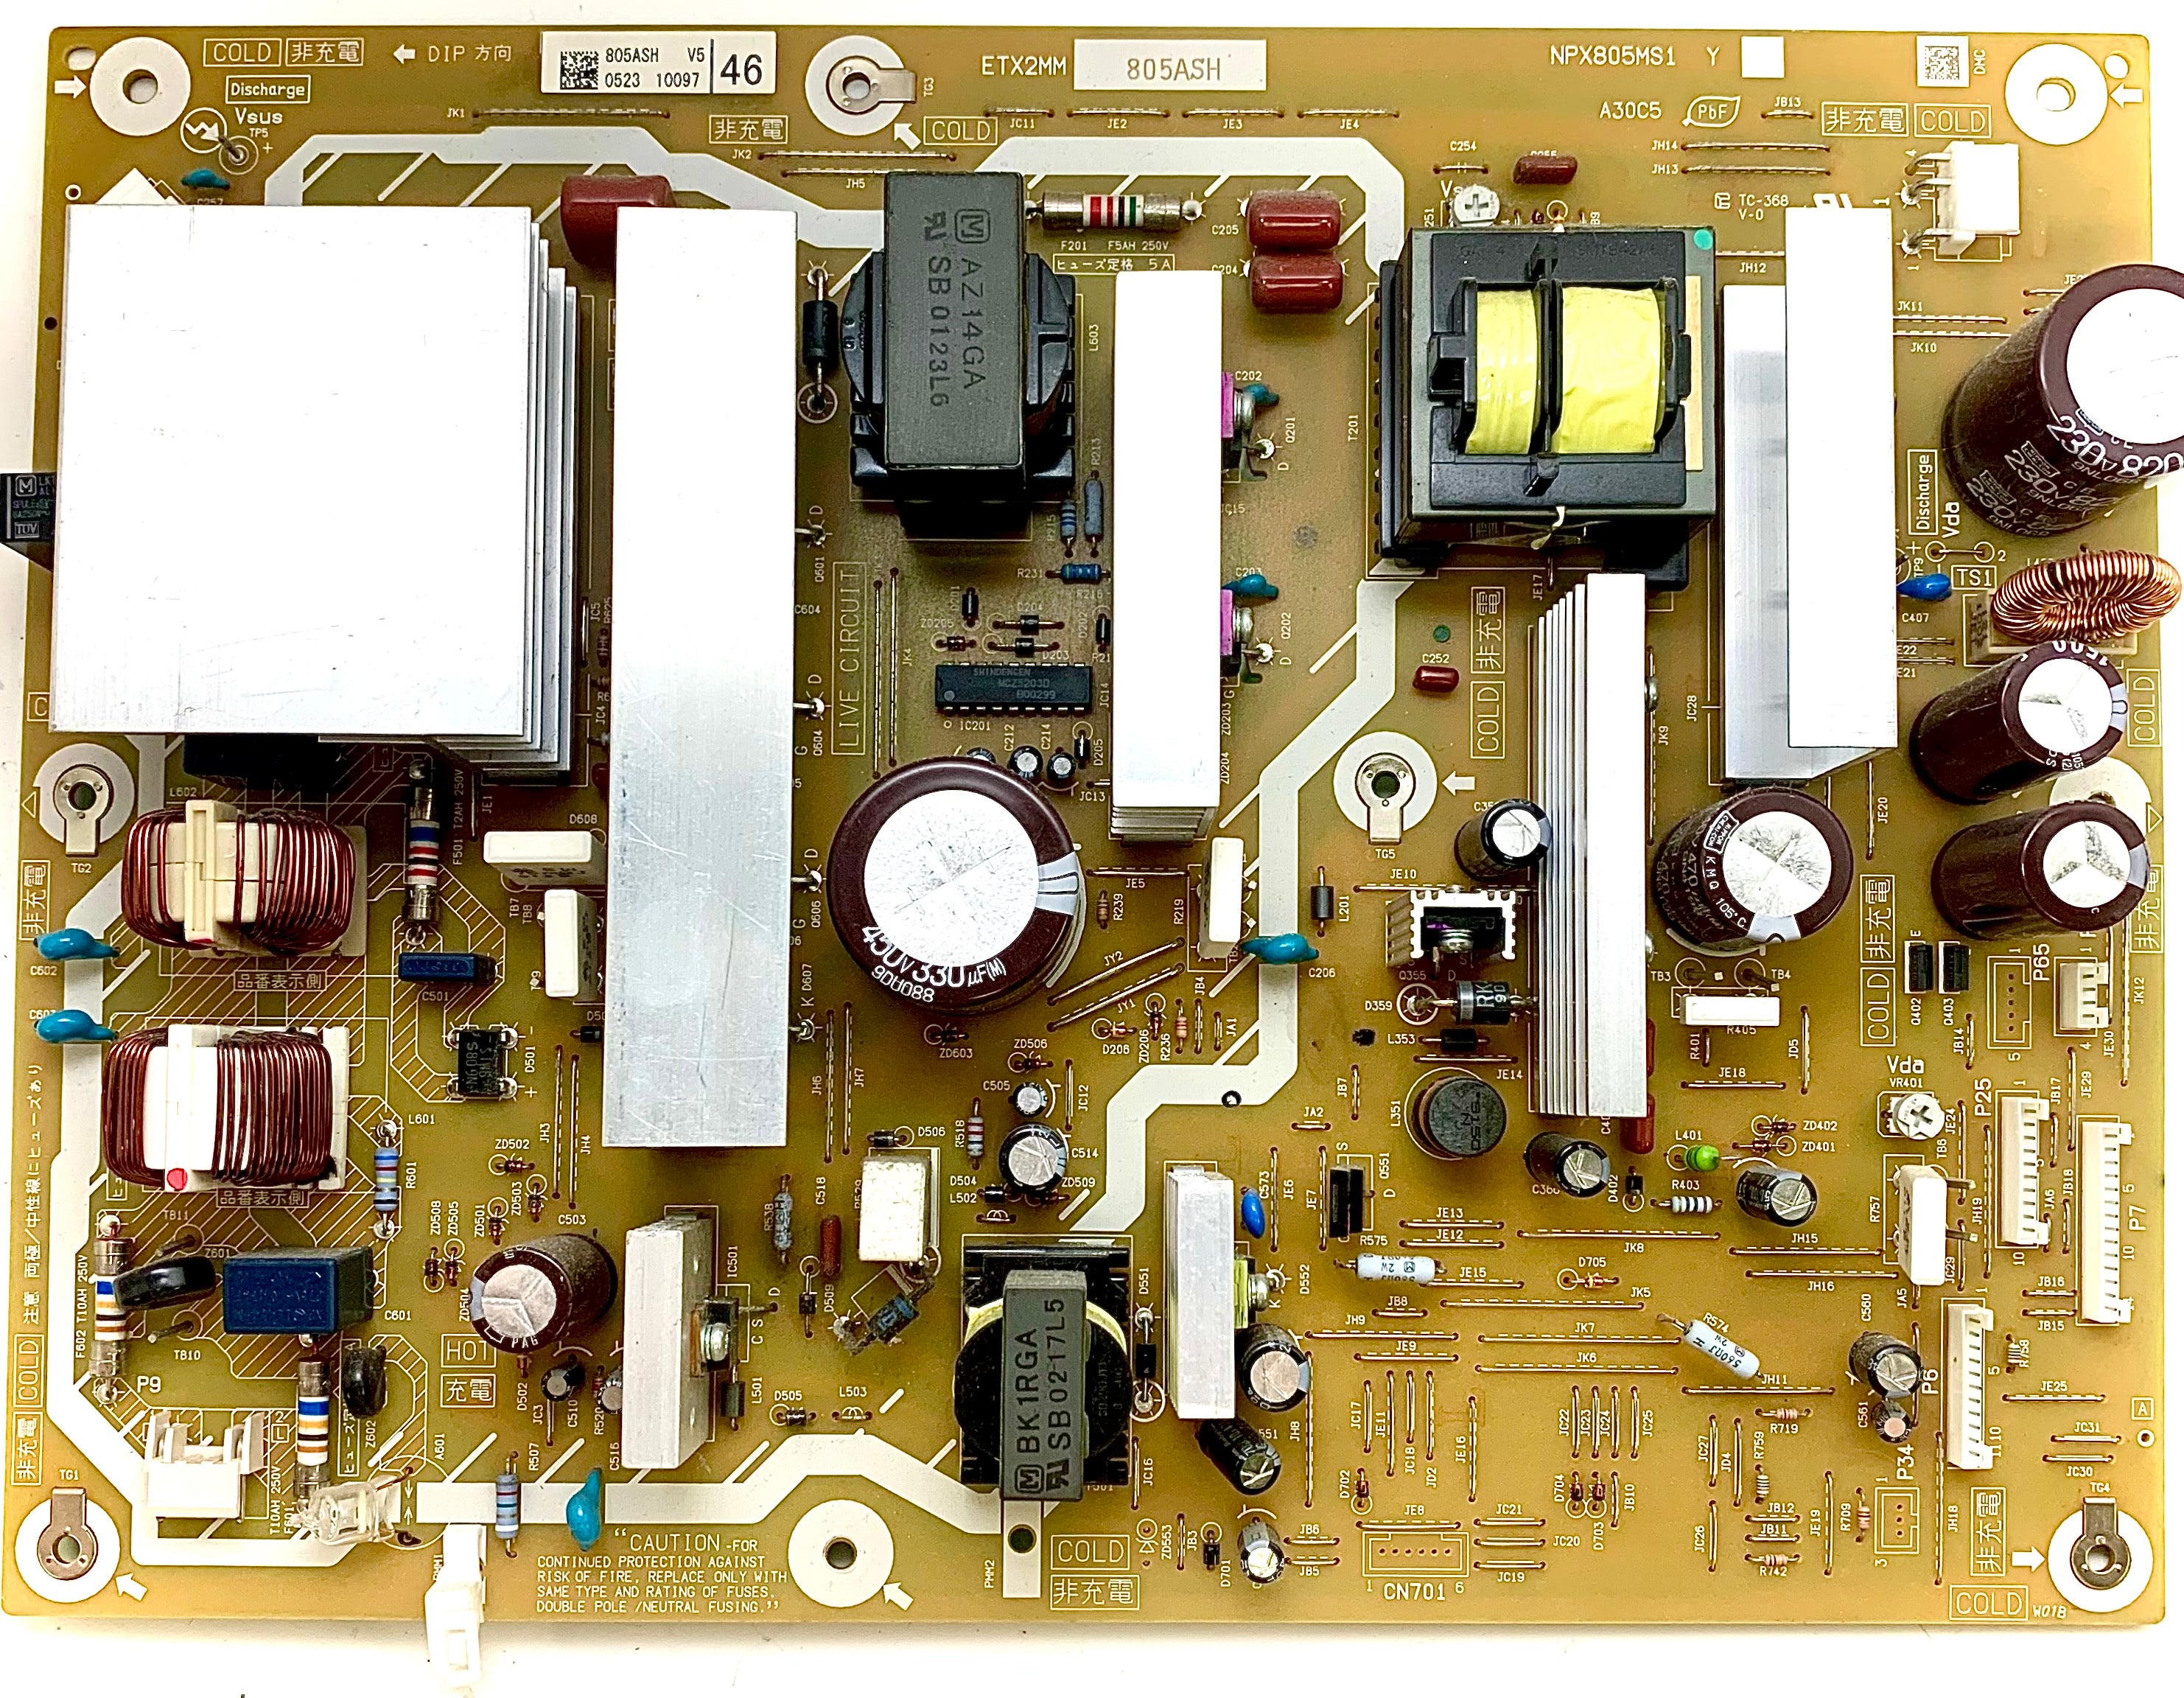 Panasonic ETX2MM805ASH (NPX805MS1) P Board for TC-P46G25